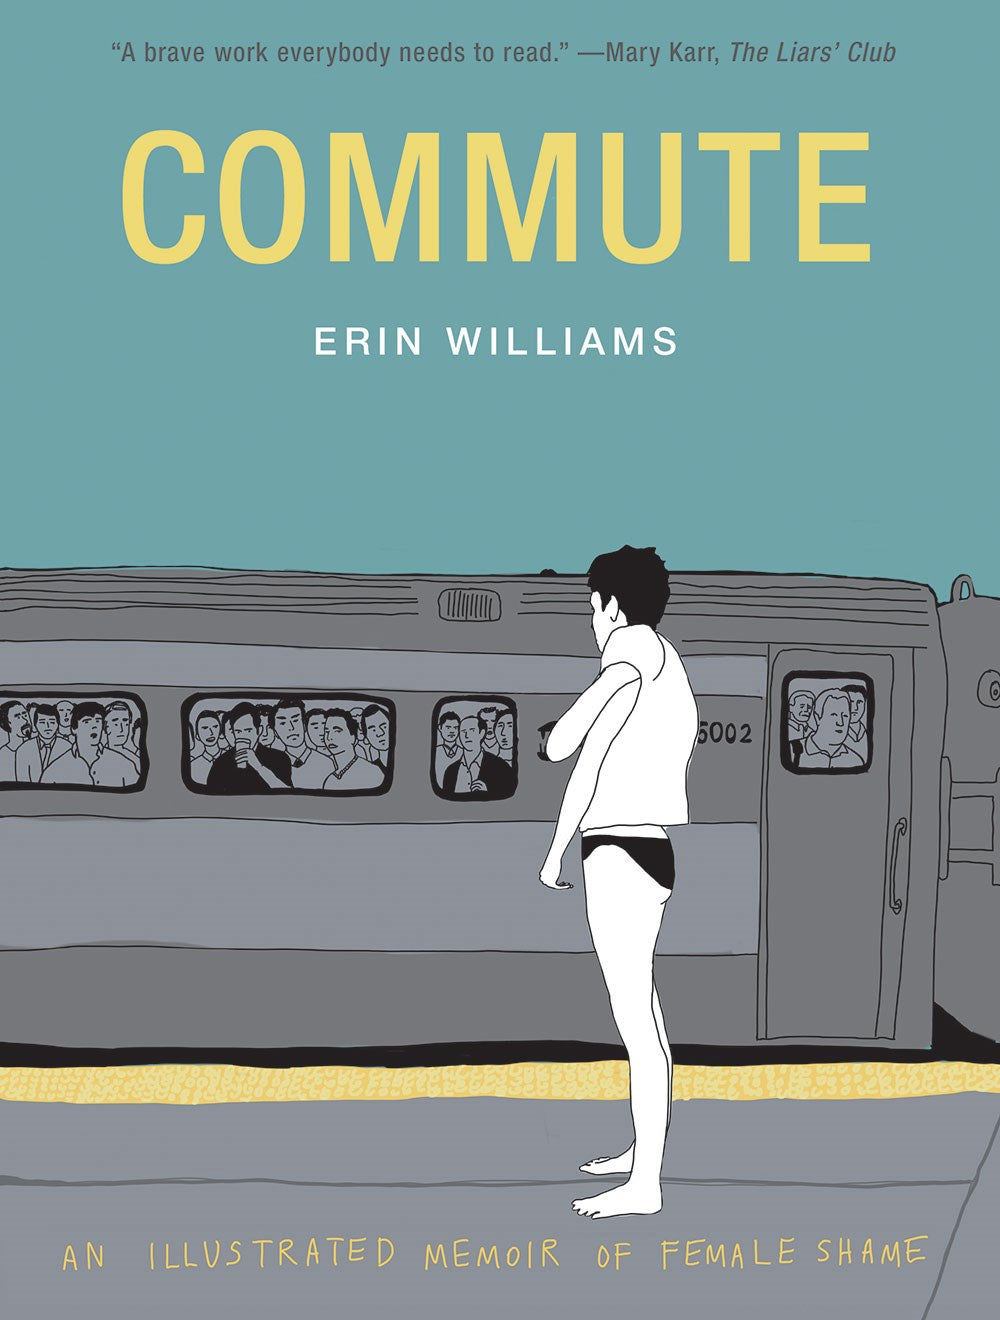 Commute: An Illustrated Memoir of Female Shame by Erin Williams